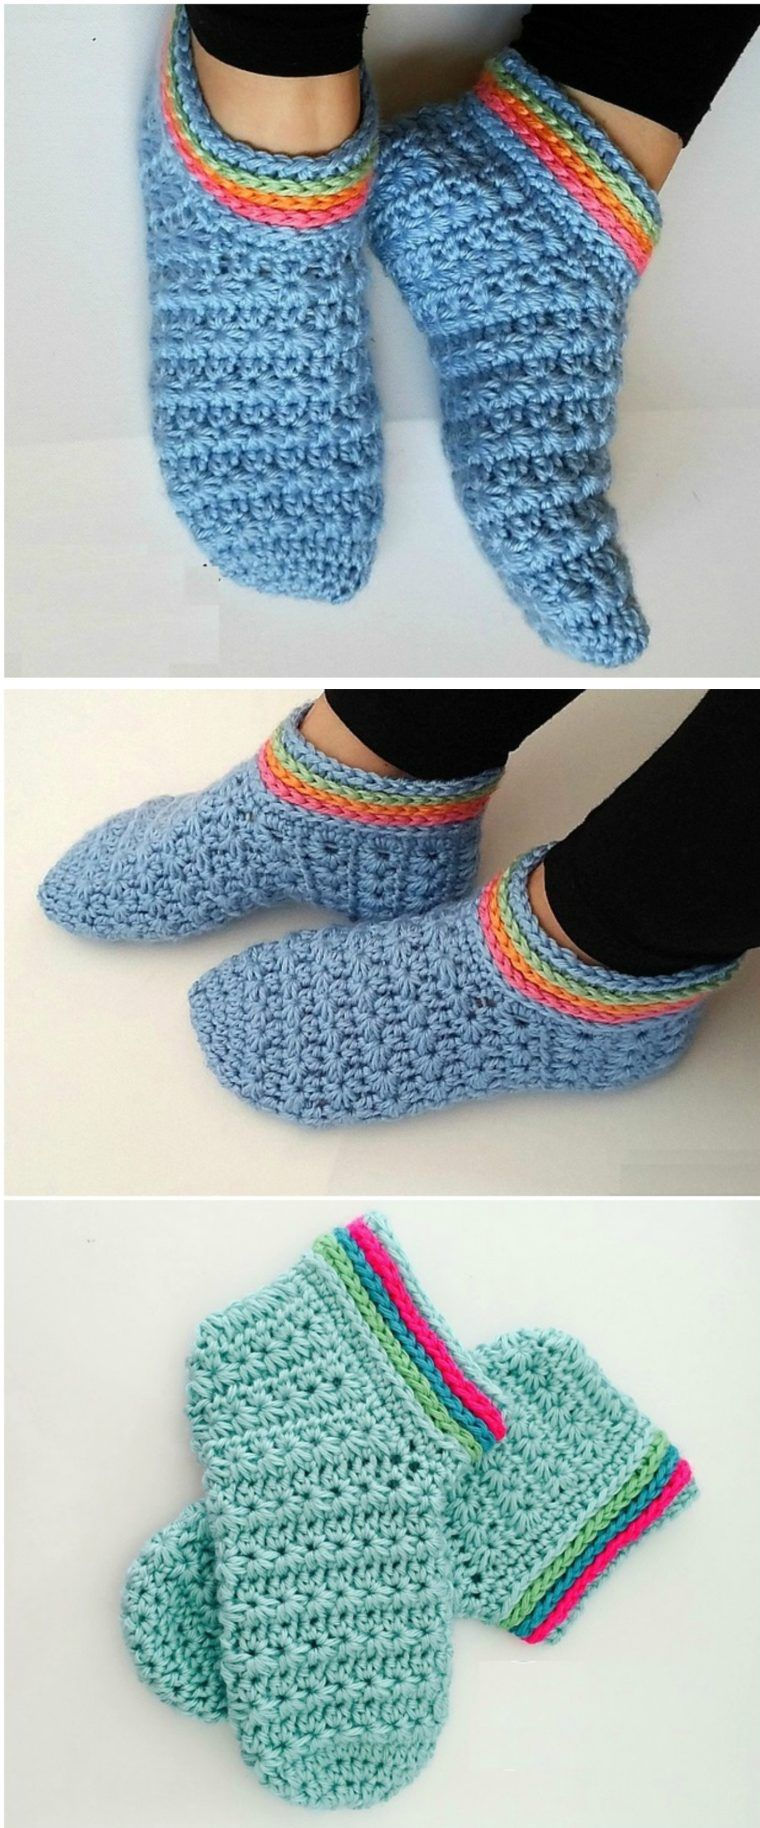 Crochet Starlight Slippers | Crochet Stitches, Crochet